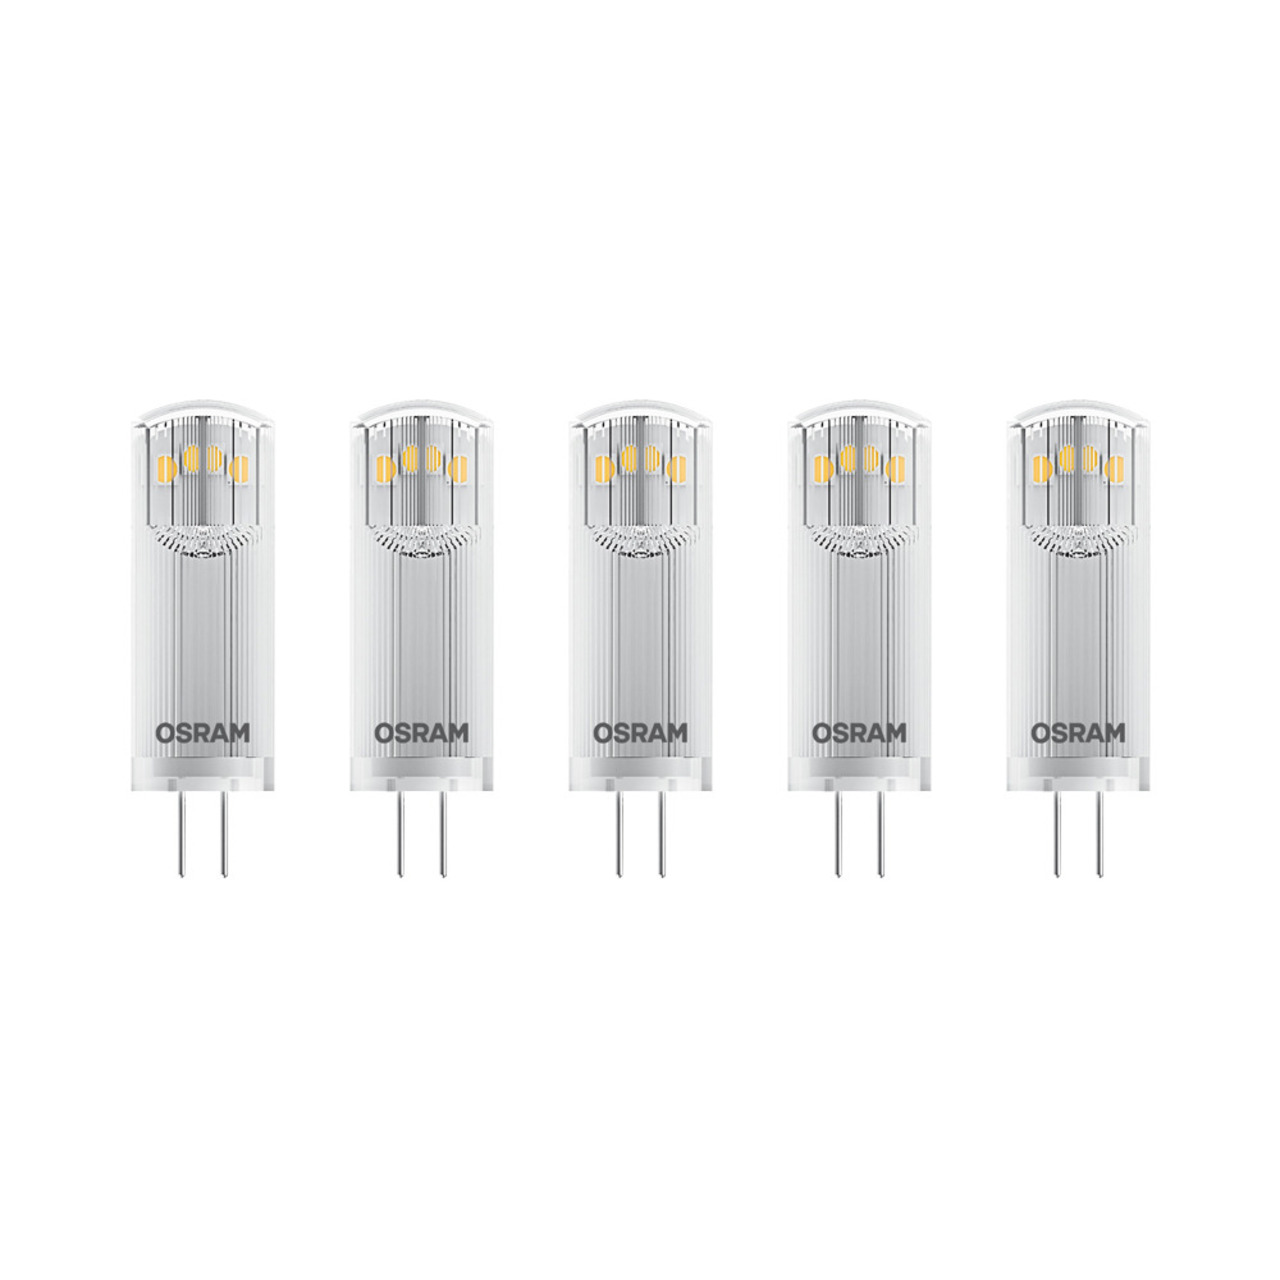 OSRAM 5er Pack 1-8-W-G4-LED-Lampen- warmweiss- 12 V AC unter Beleuchtung